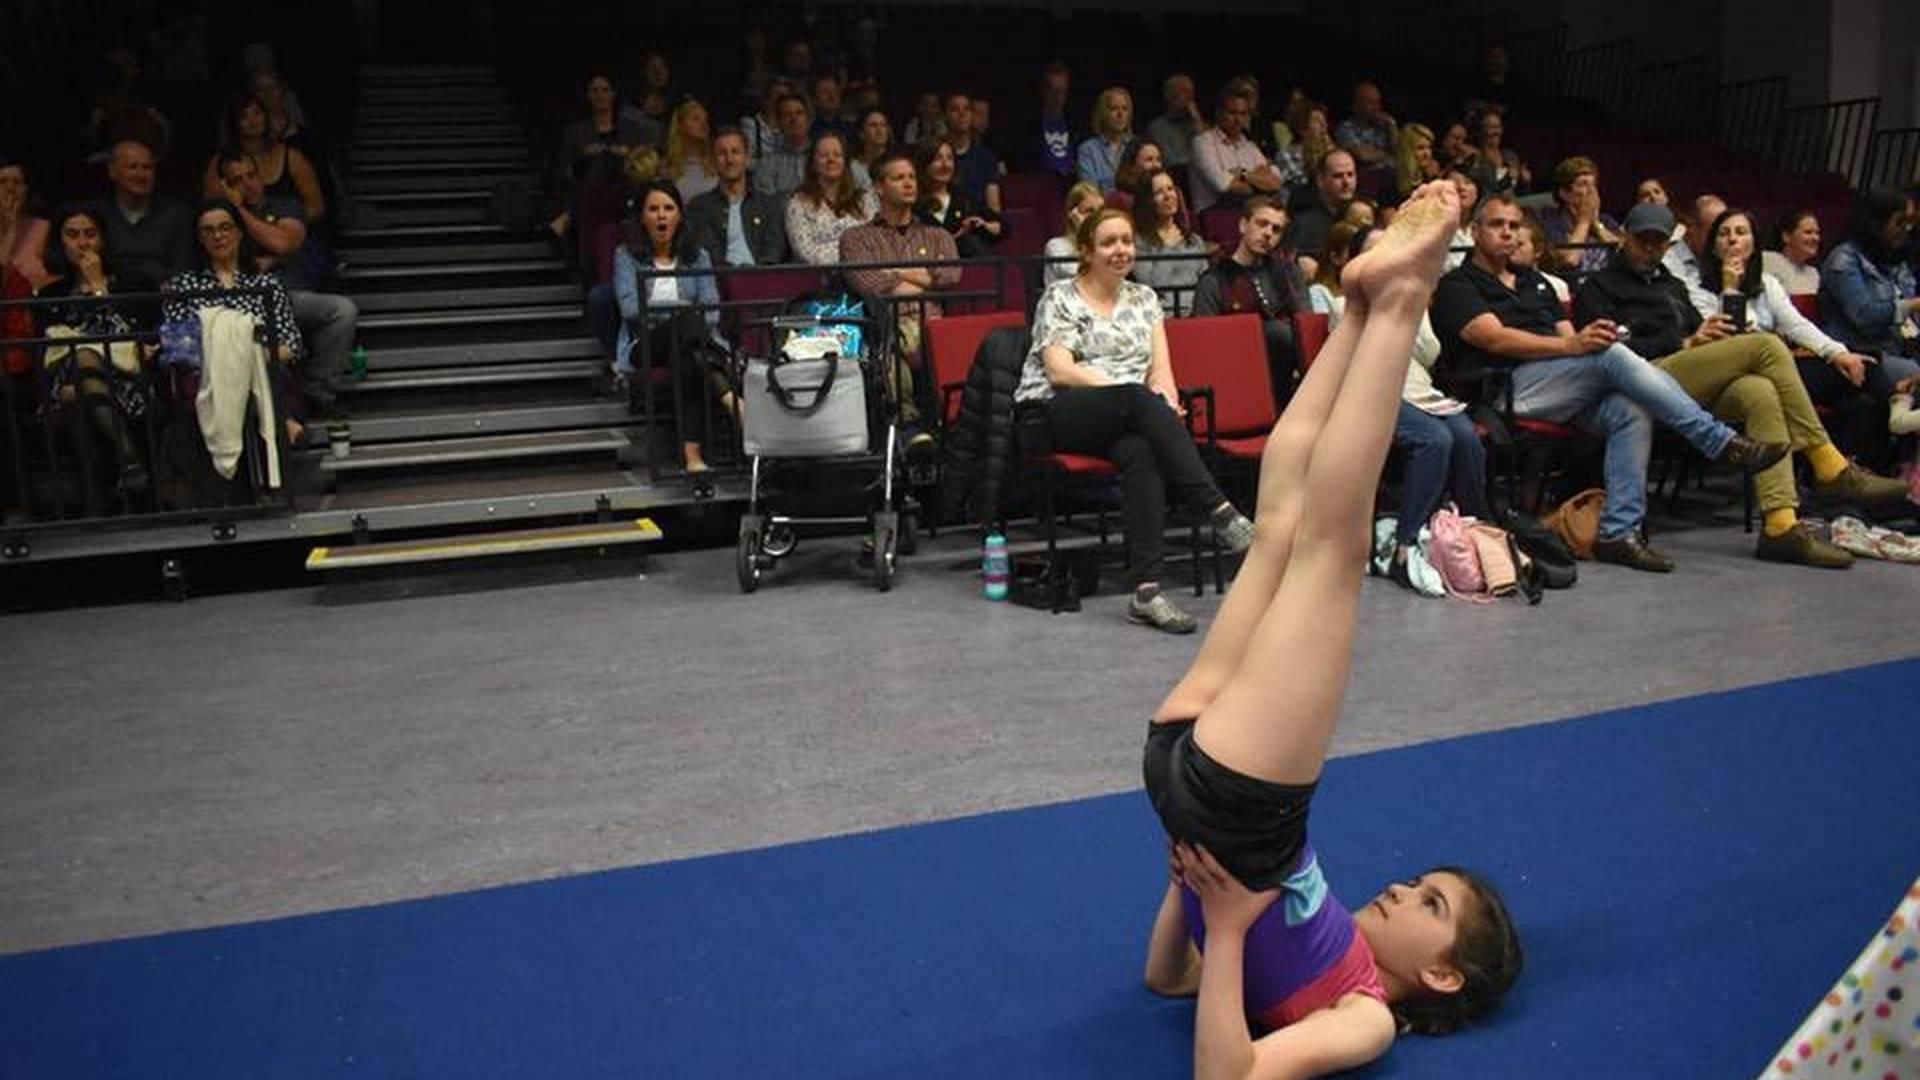 City of Edinburgh Gymnastics Club photo